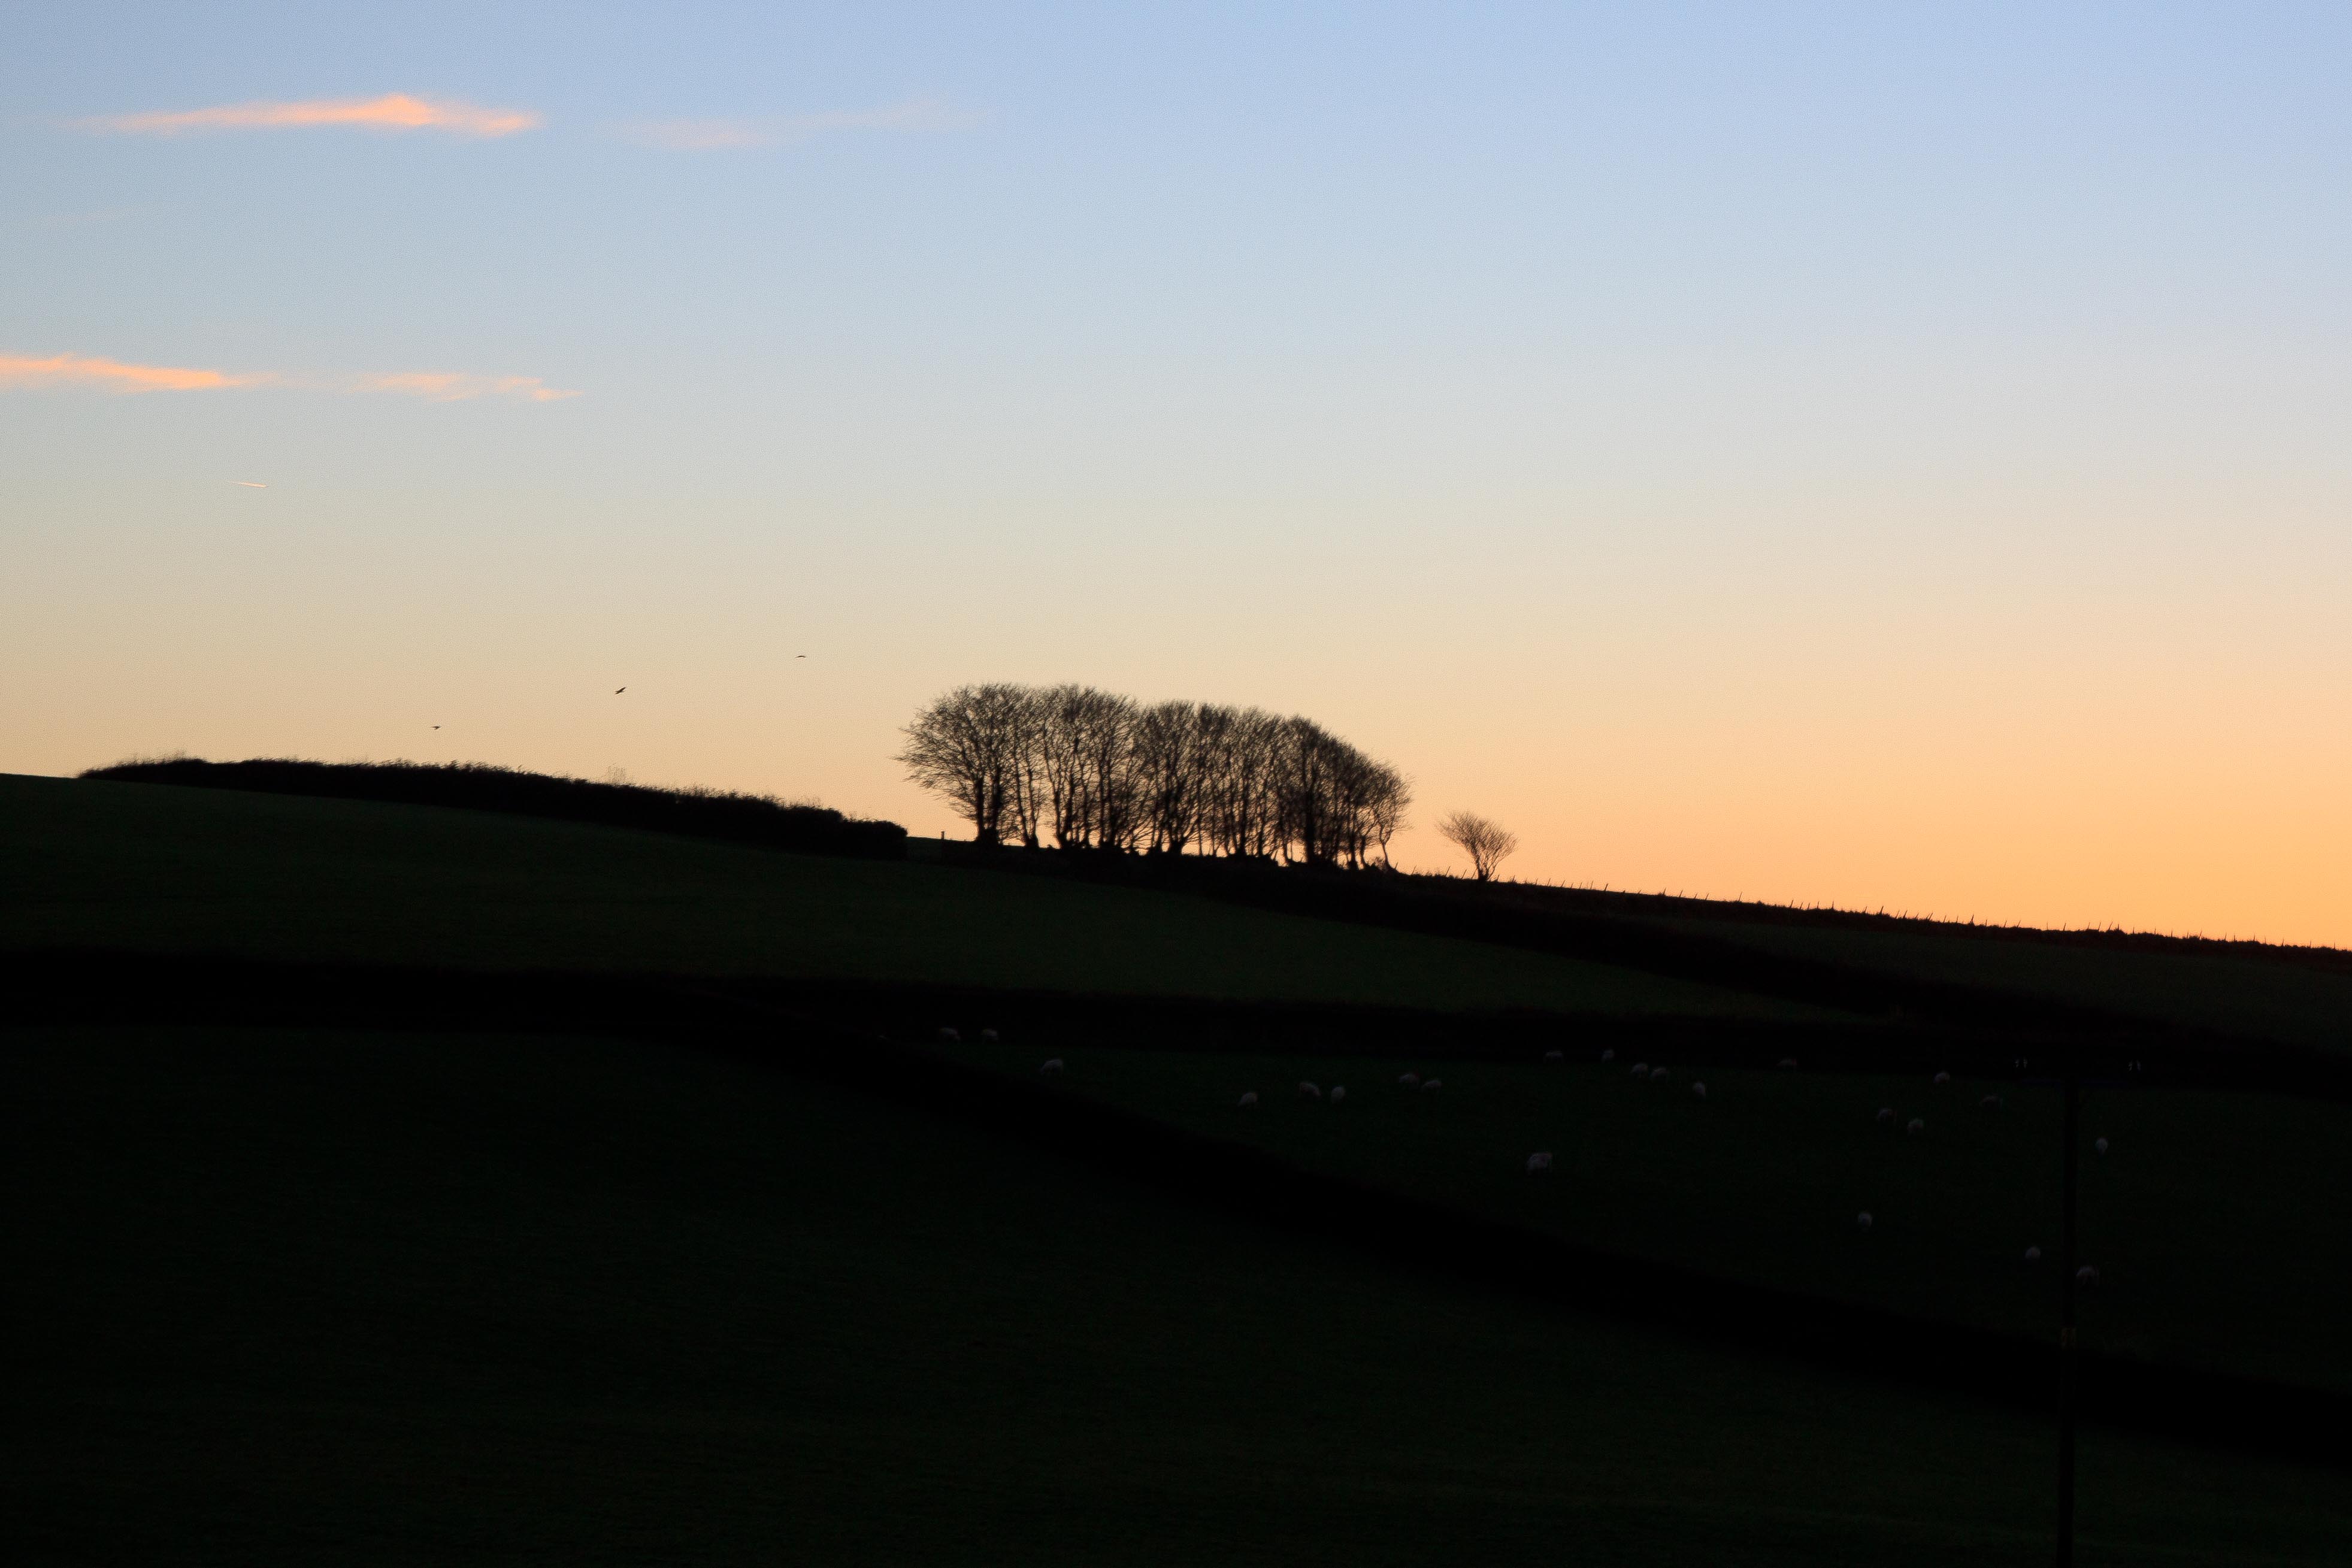 Exmoor Trees against the evening sky near Challacombe